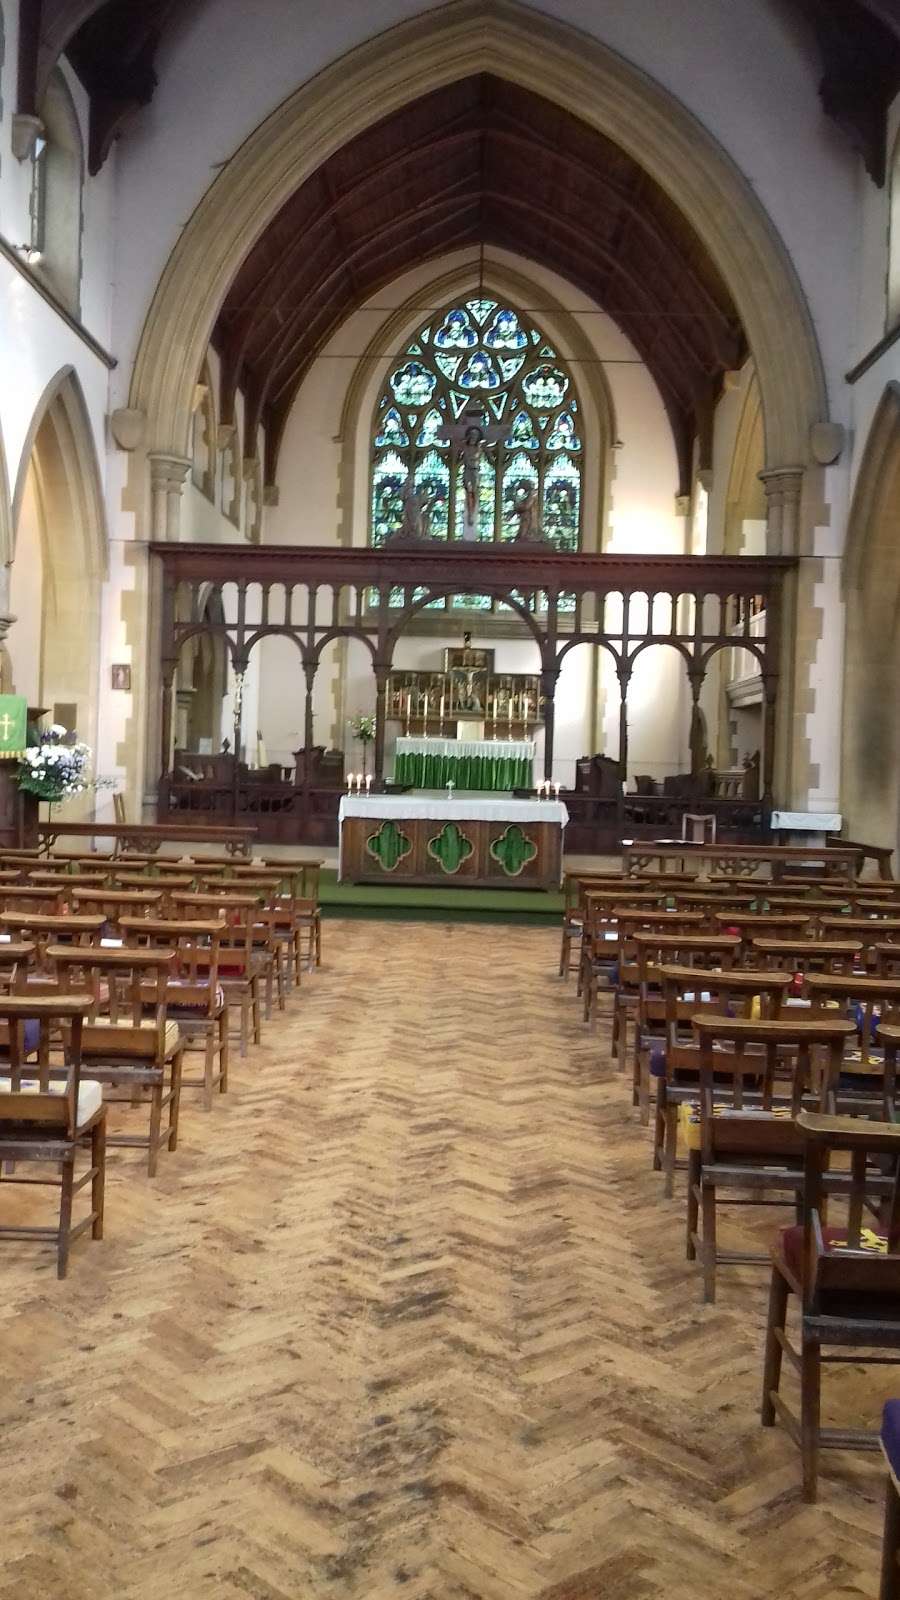 St. Michael and All Angels Church | London SE2 9DZ, UK | Phone: 020 8311 0377